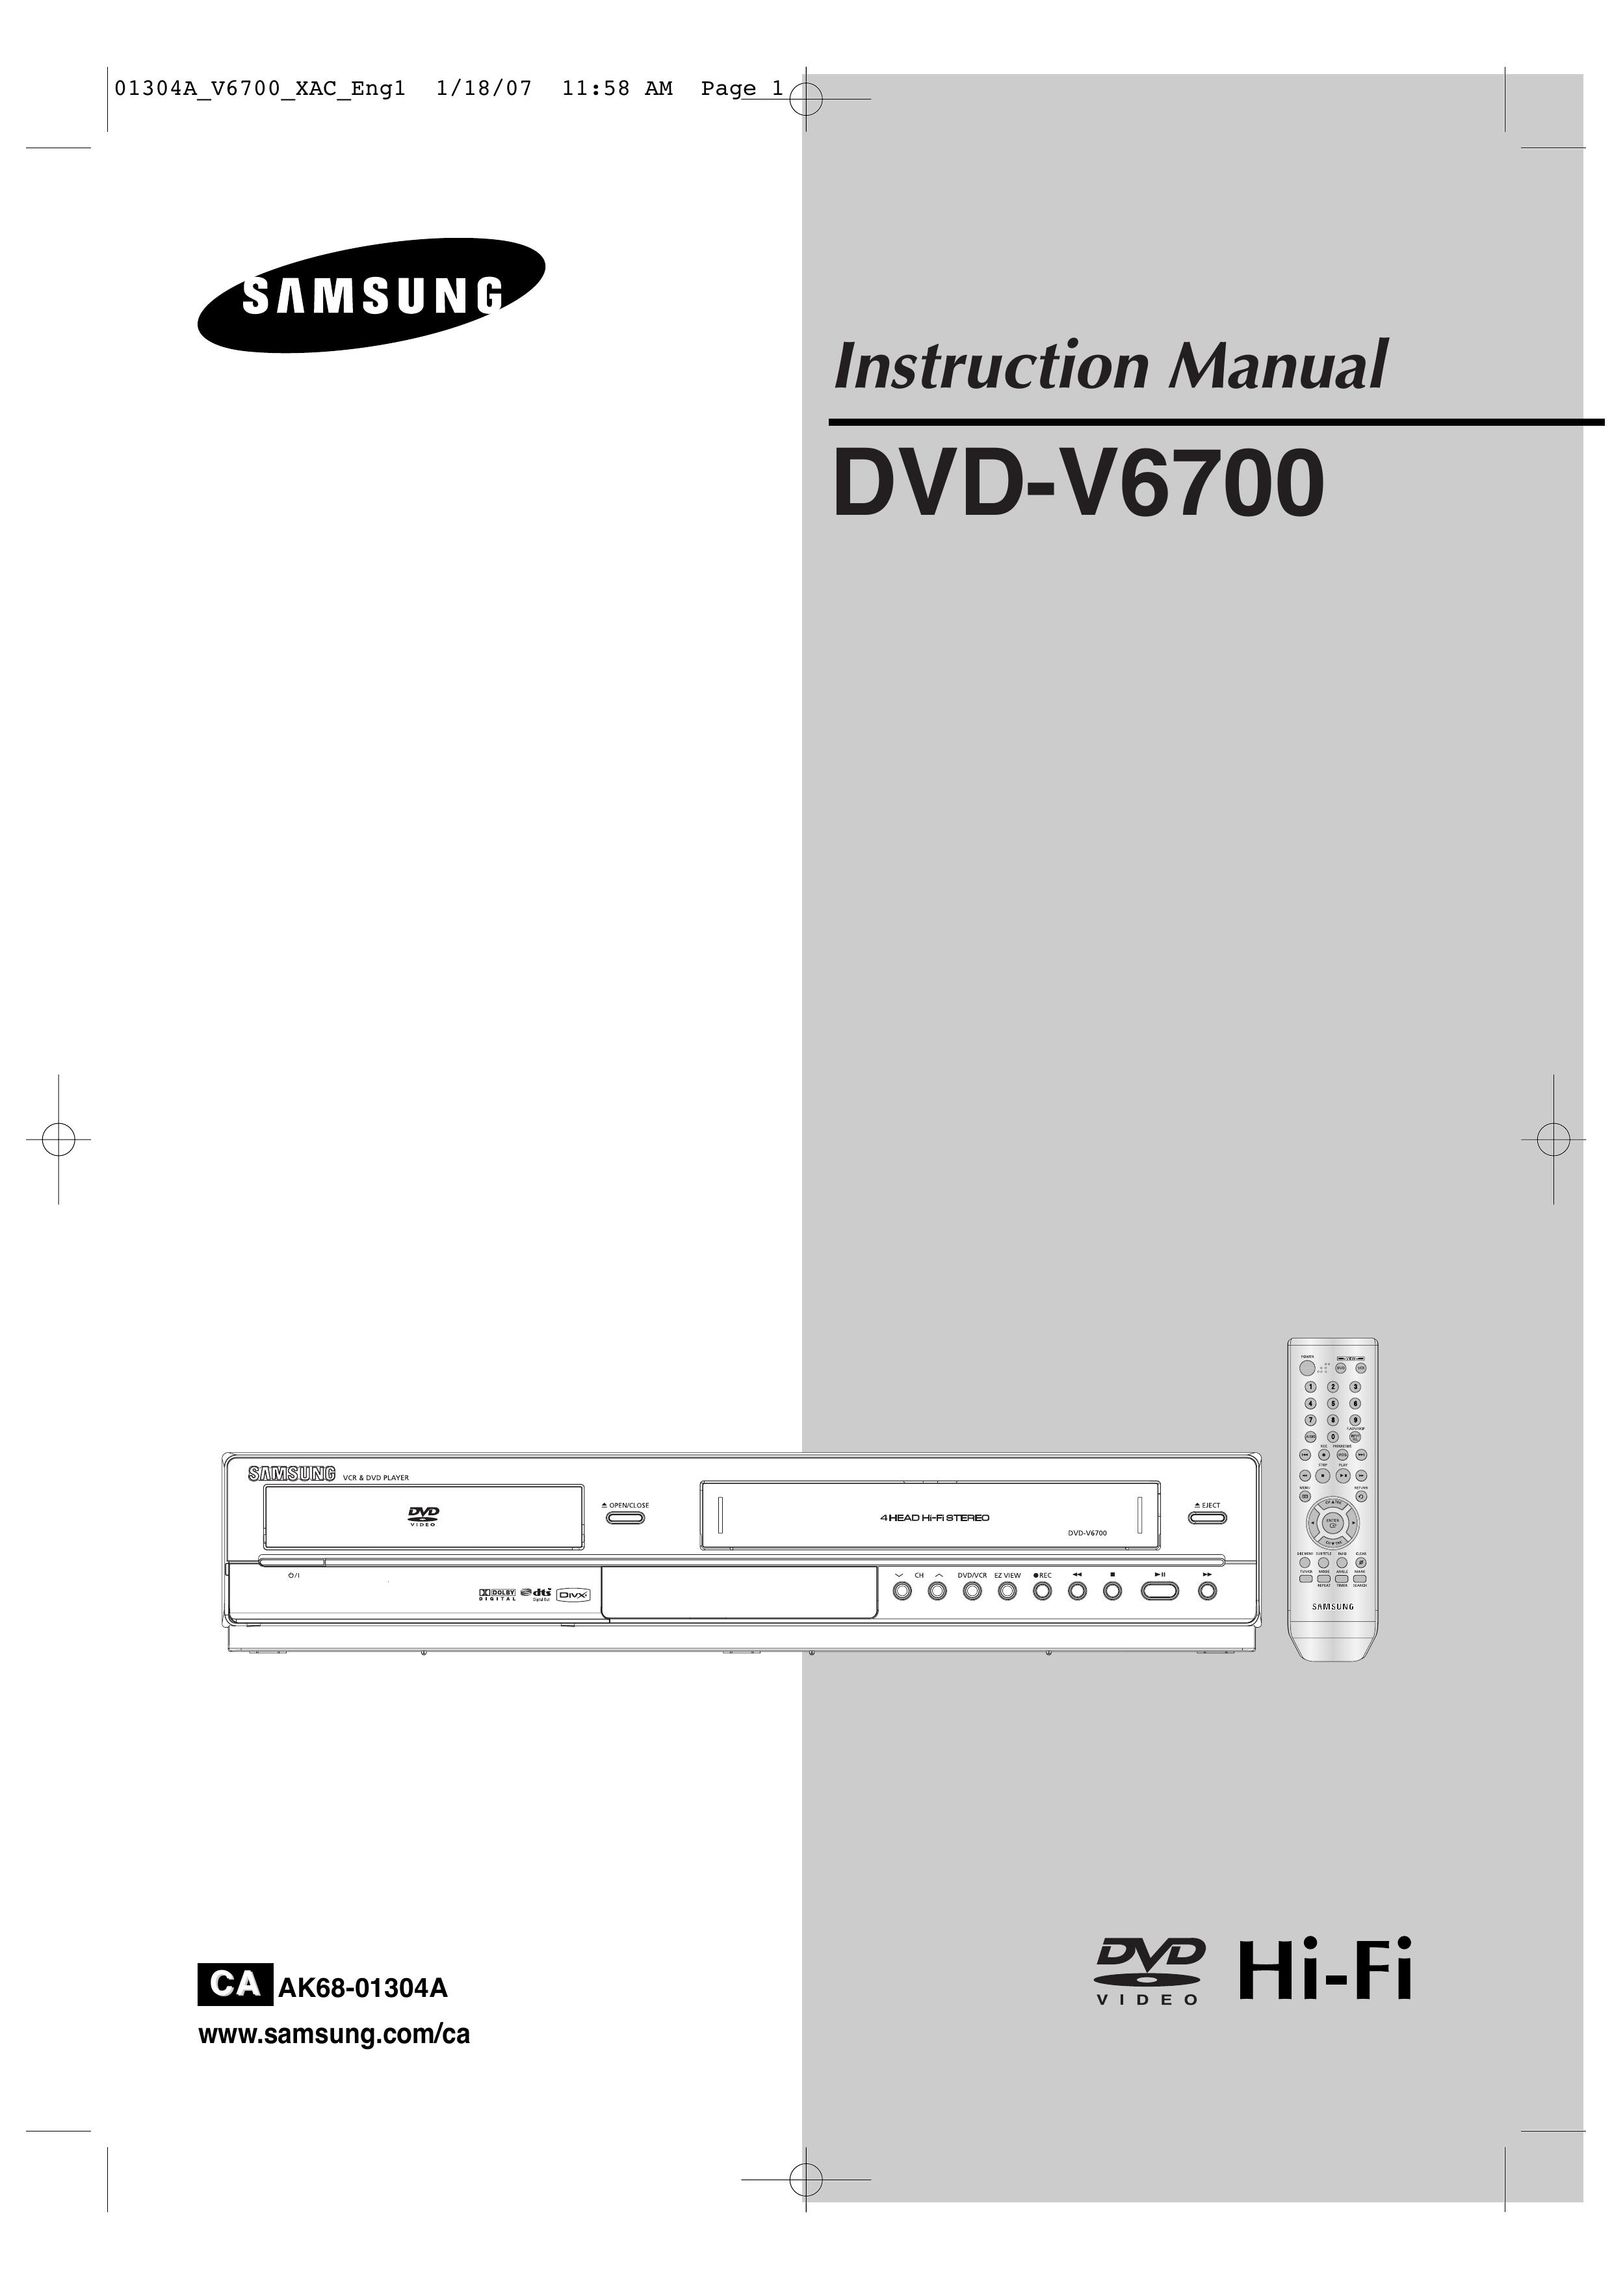 Samsung 20070205090323359 DVD Recorder User Manual